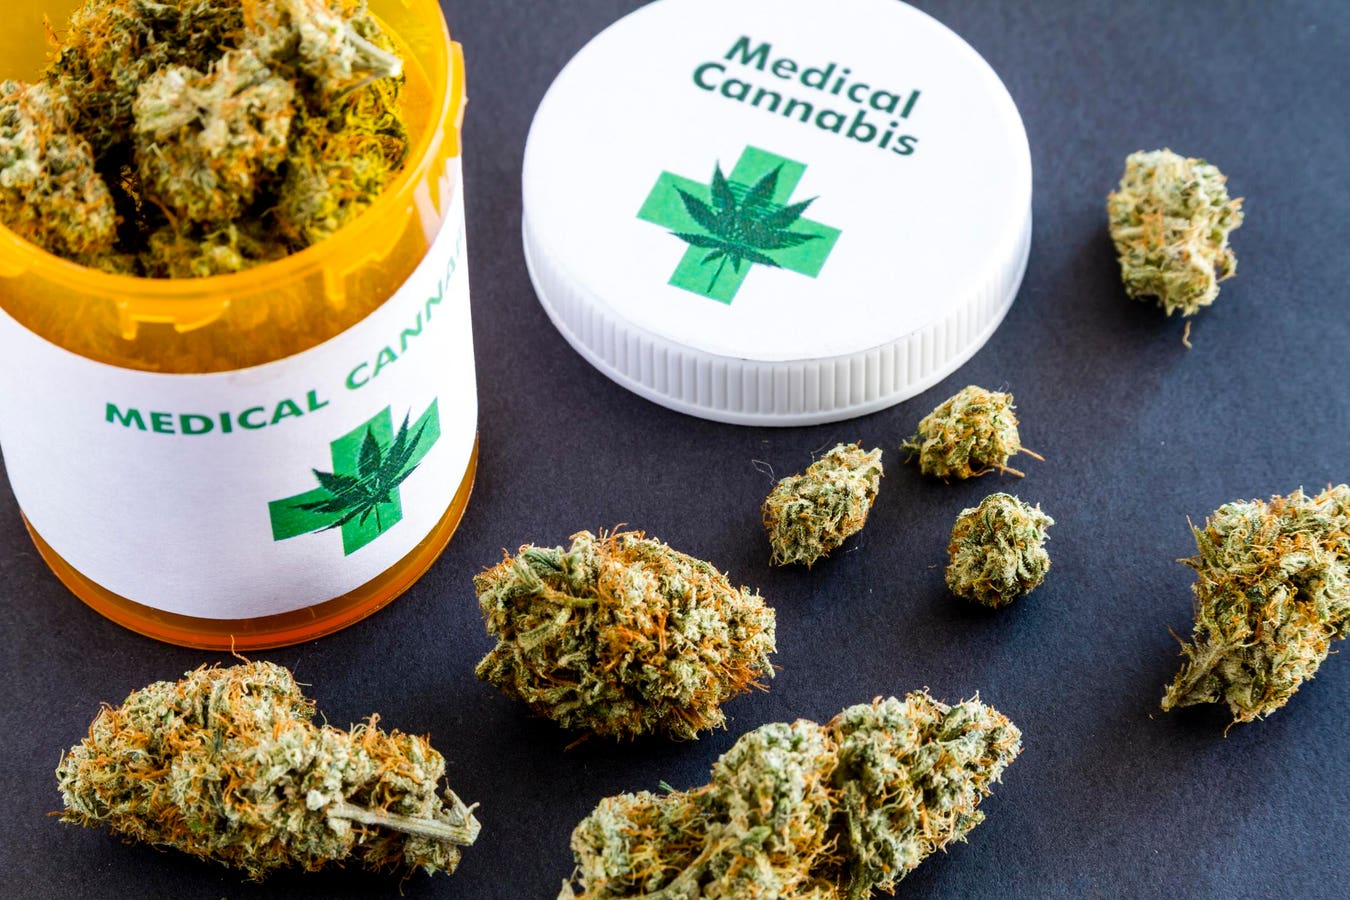 North Carolina Senate Approves Medical Marijuana Bill